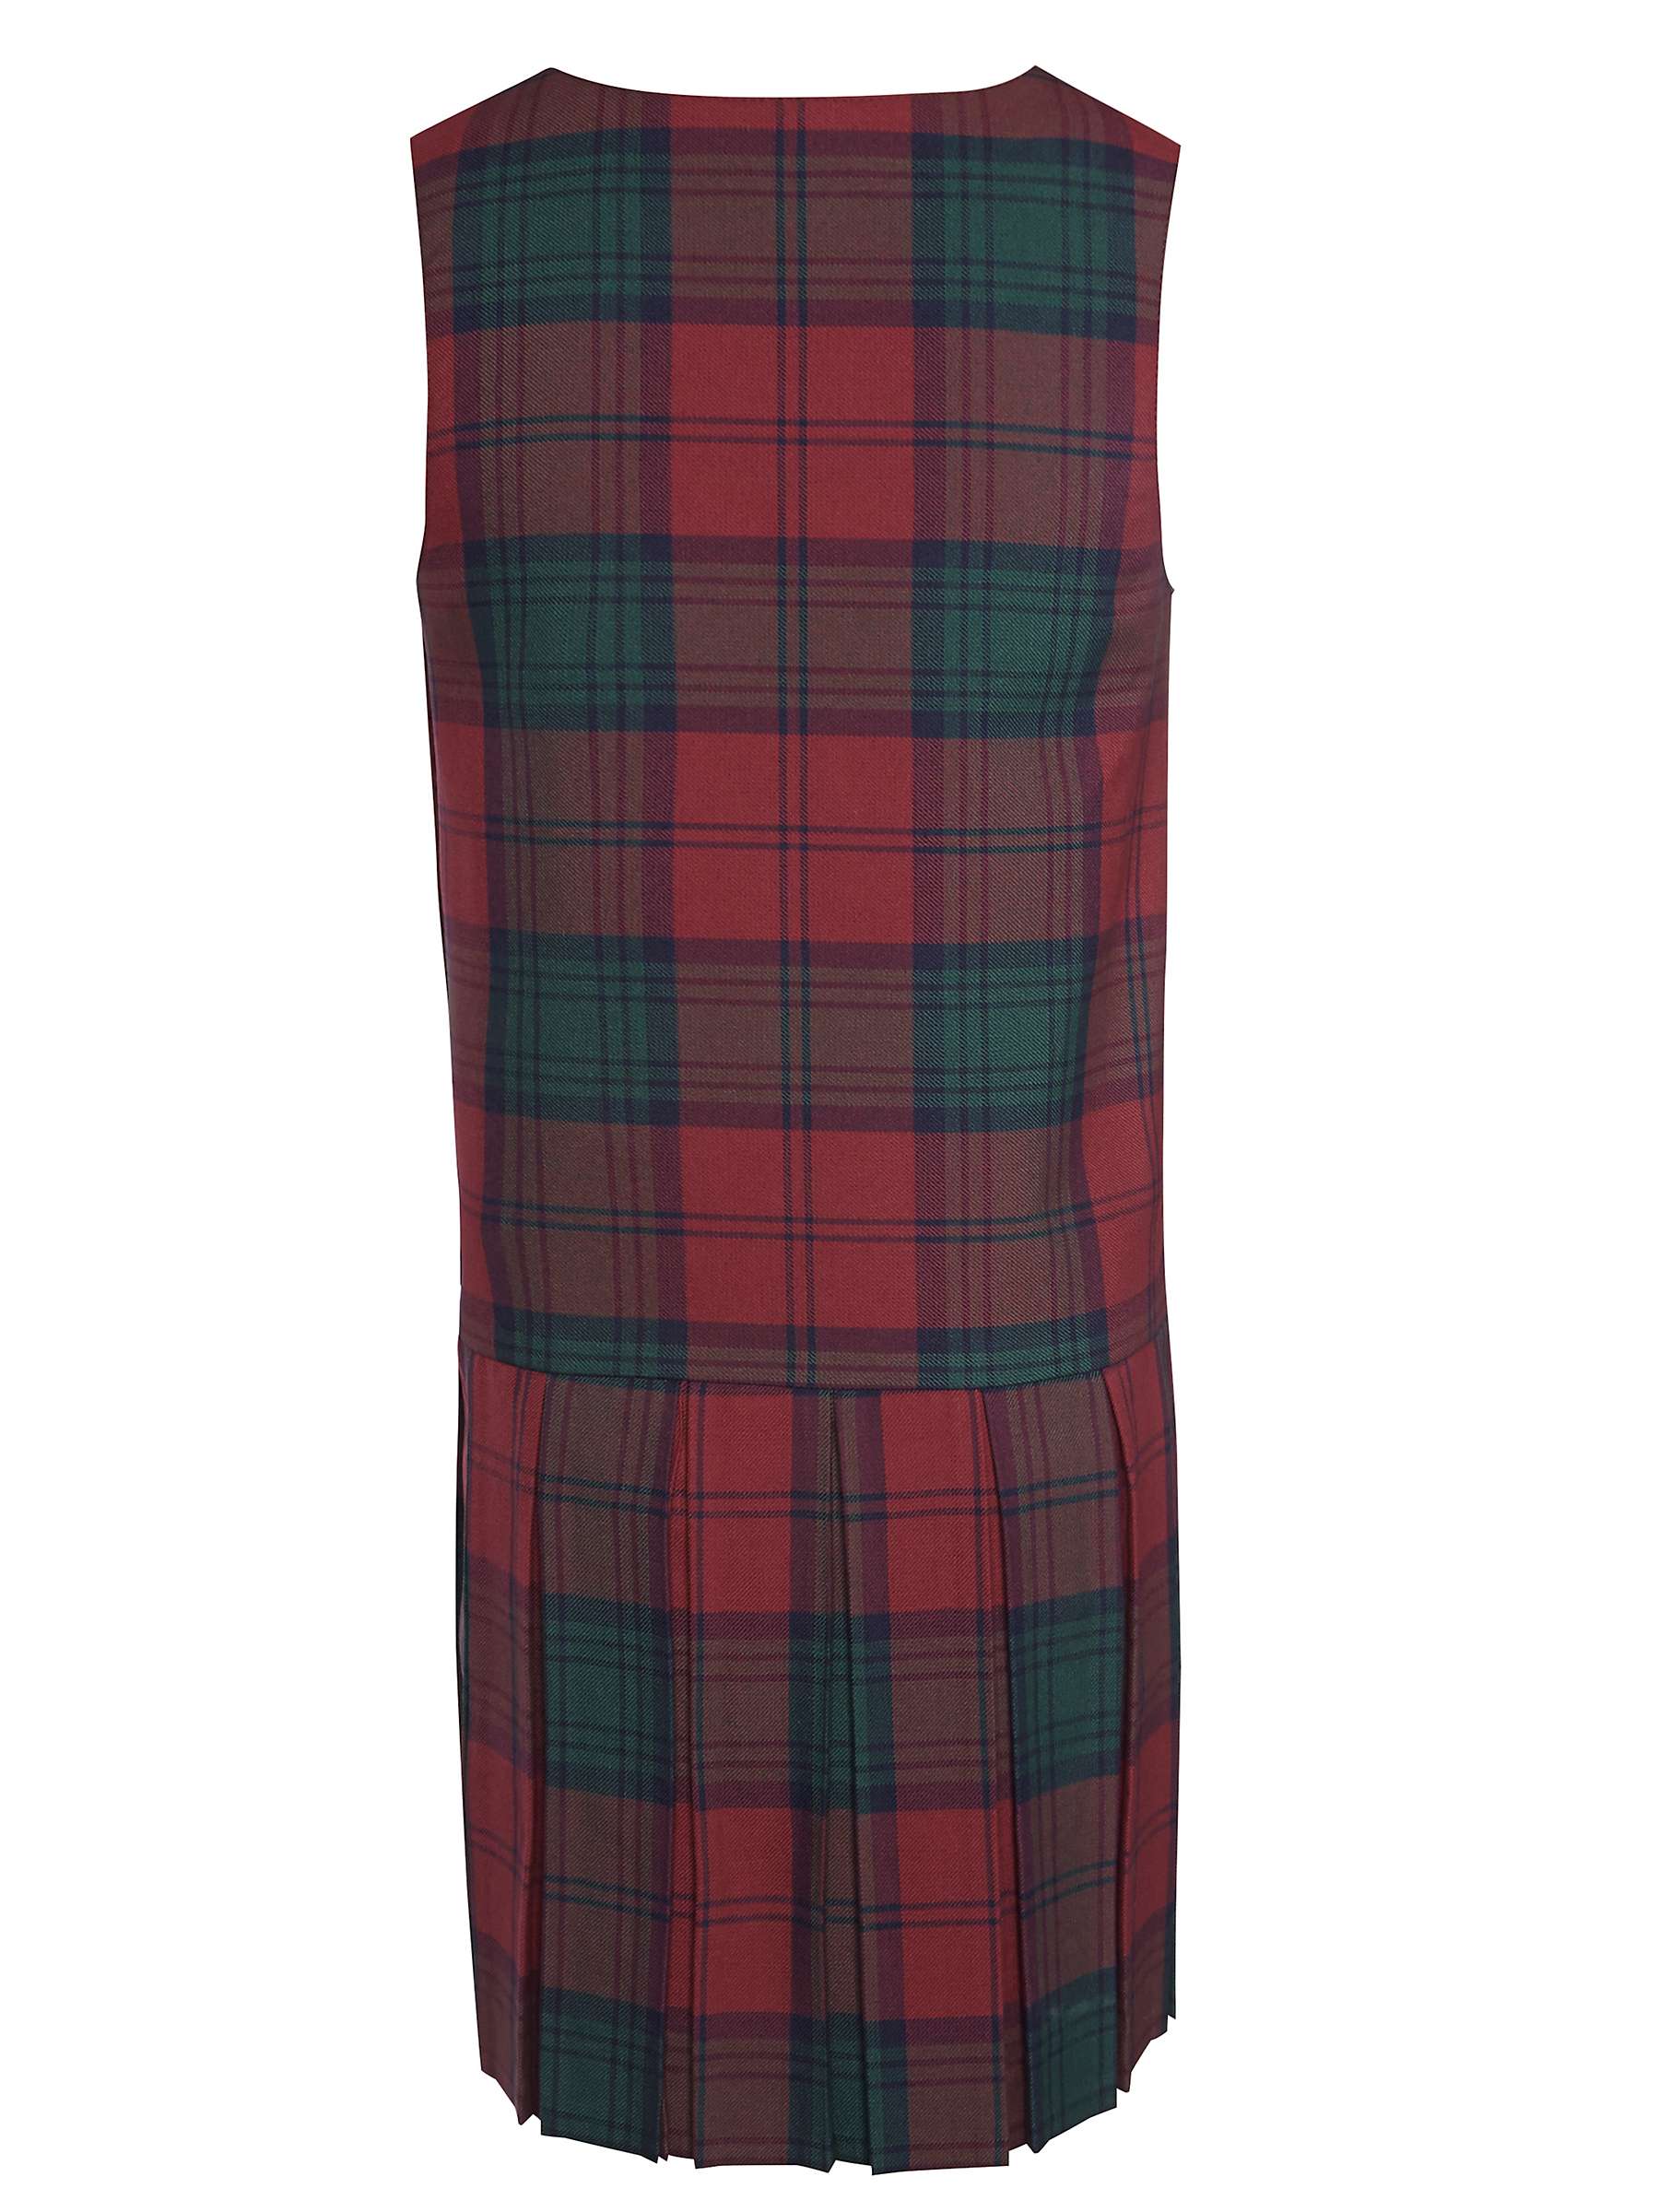 Buy Ashfold School Girls' Tartan Tunic Dress, Maroon Online at johnlewis.com